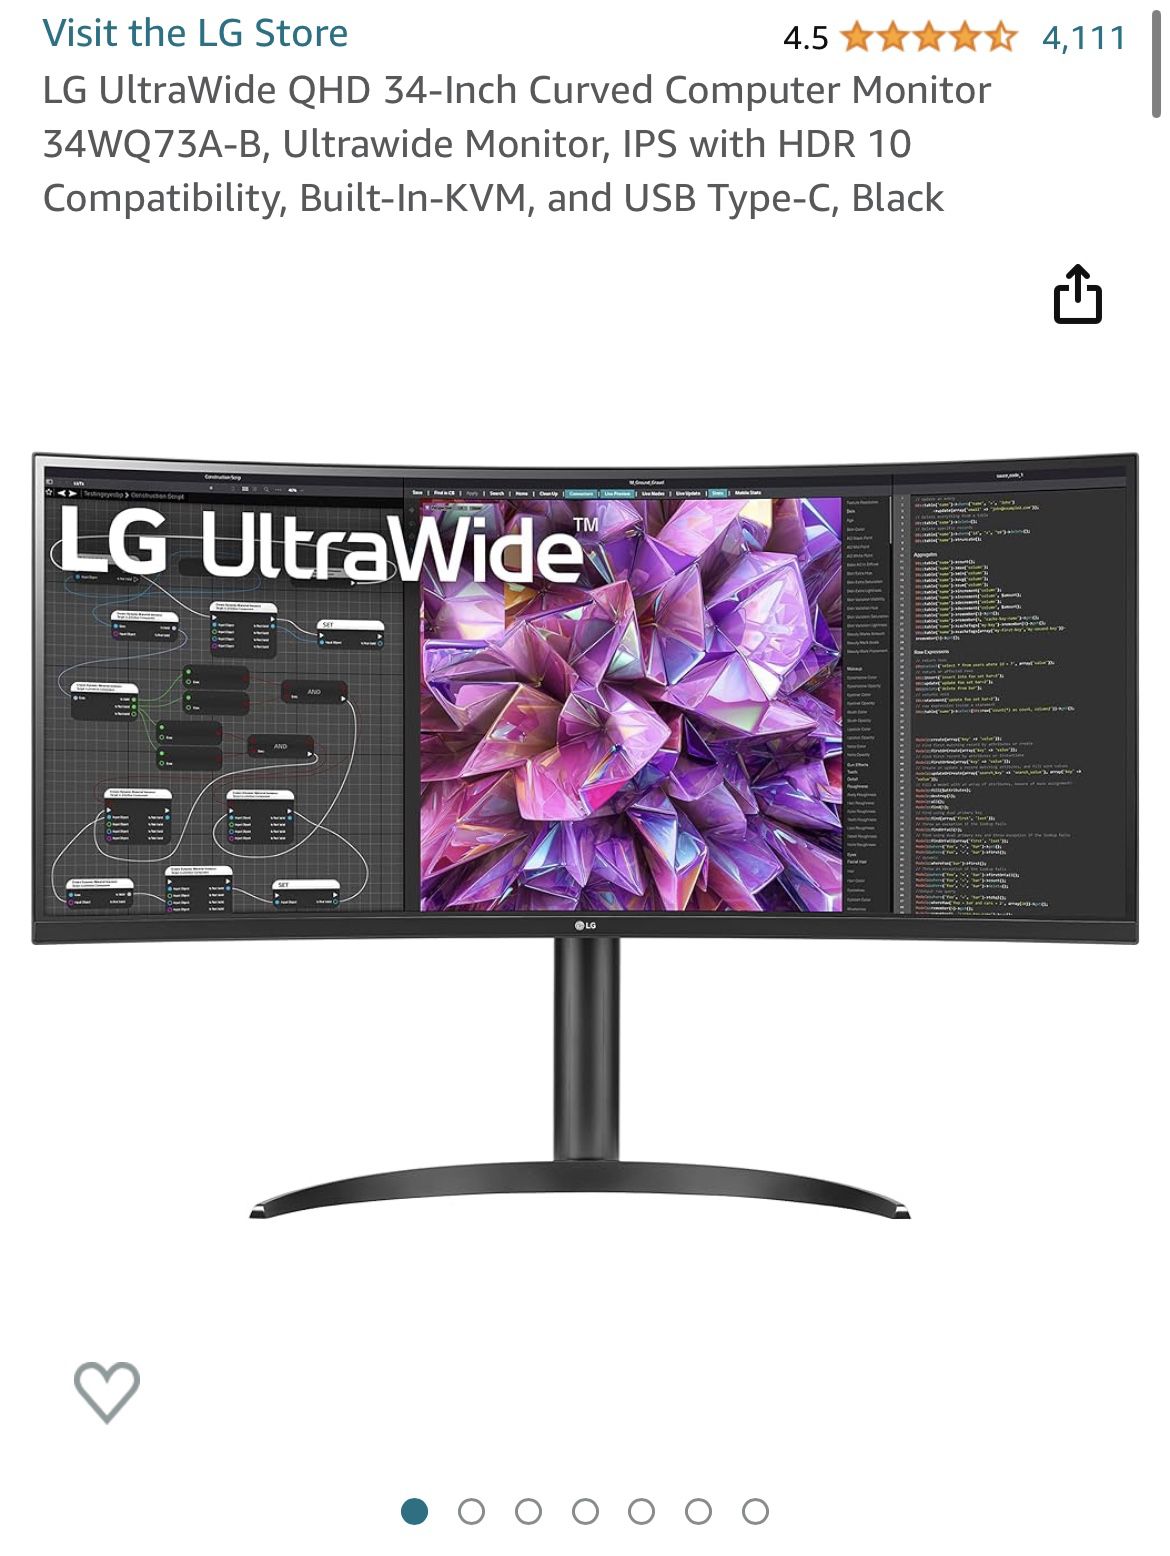 LG Ultrawide QHD 34-inch Curved Computer Monitor 34WQ73A-B